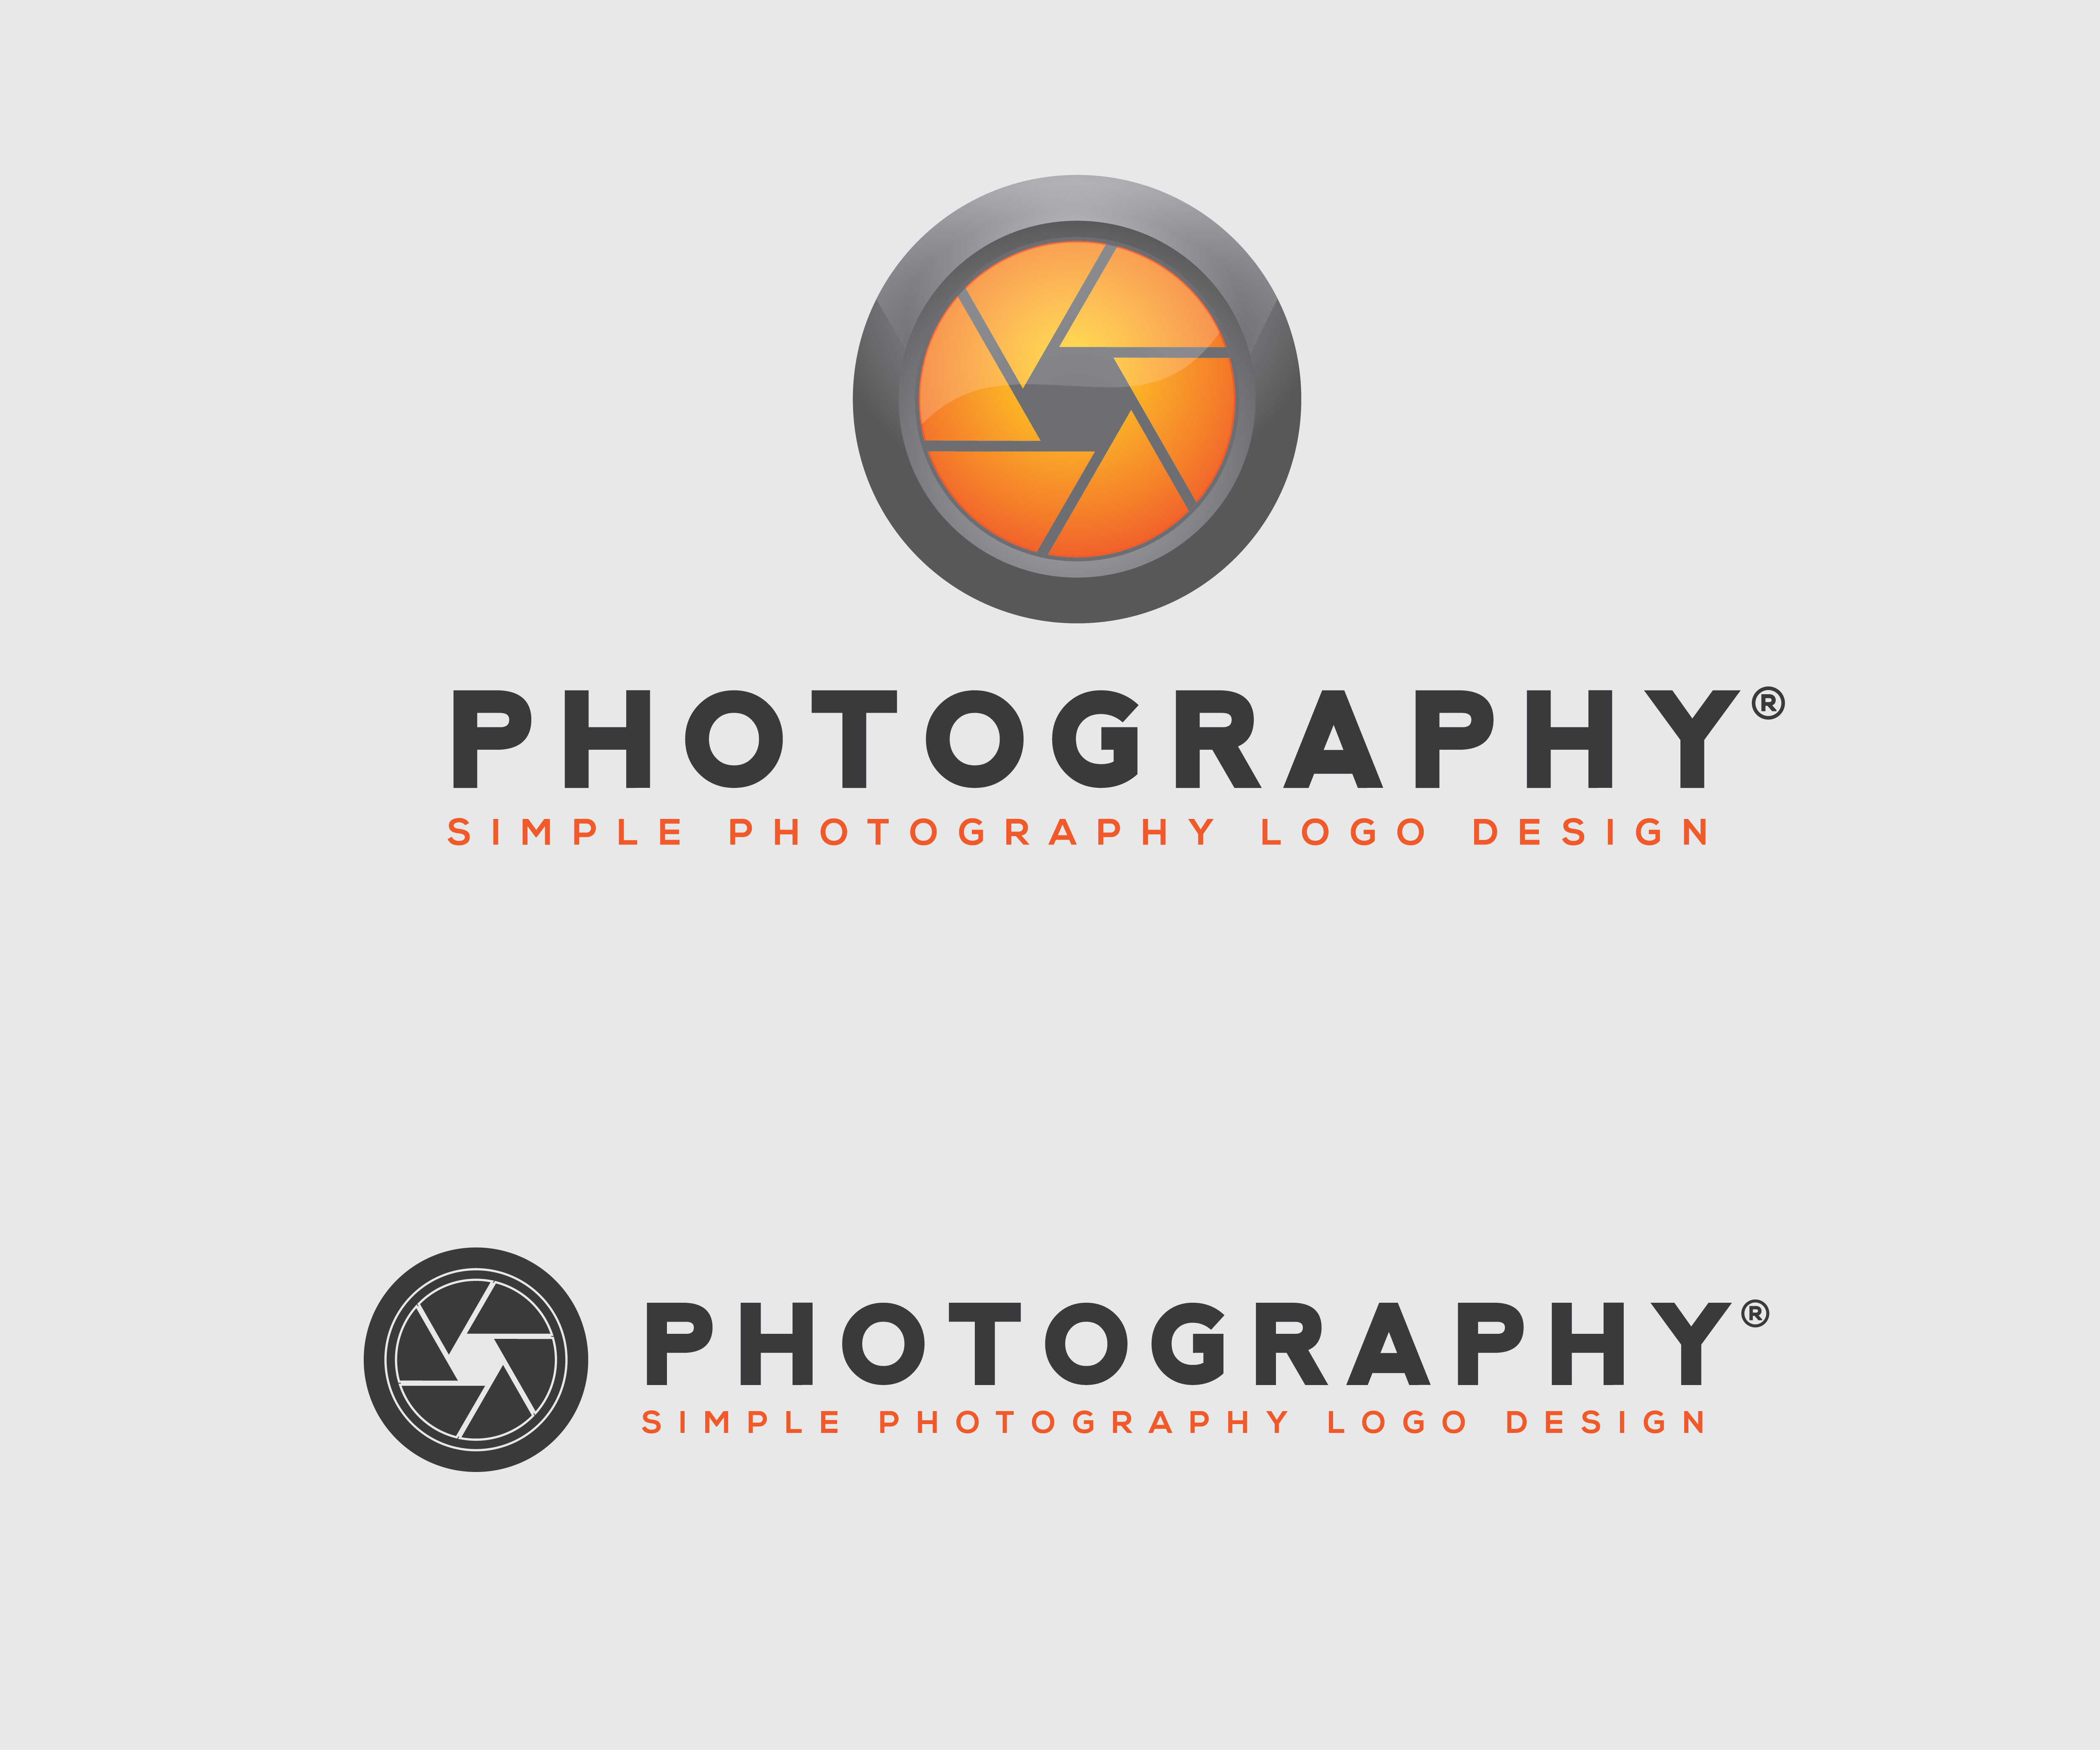 Free Photography Logo Design